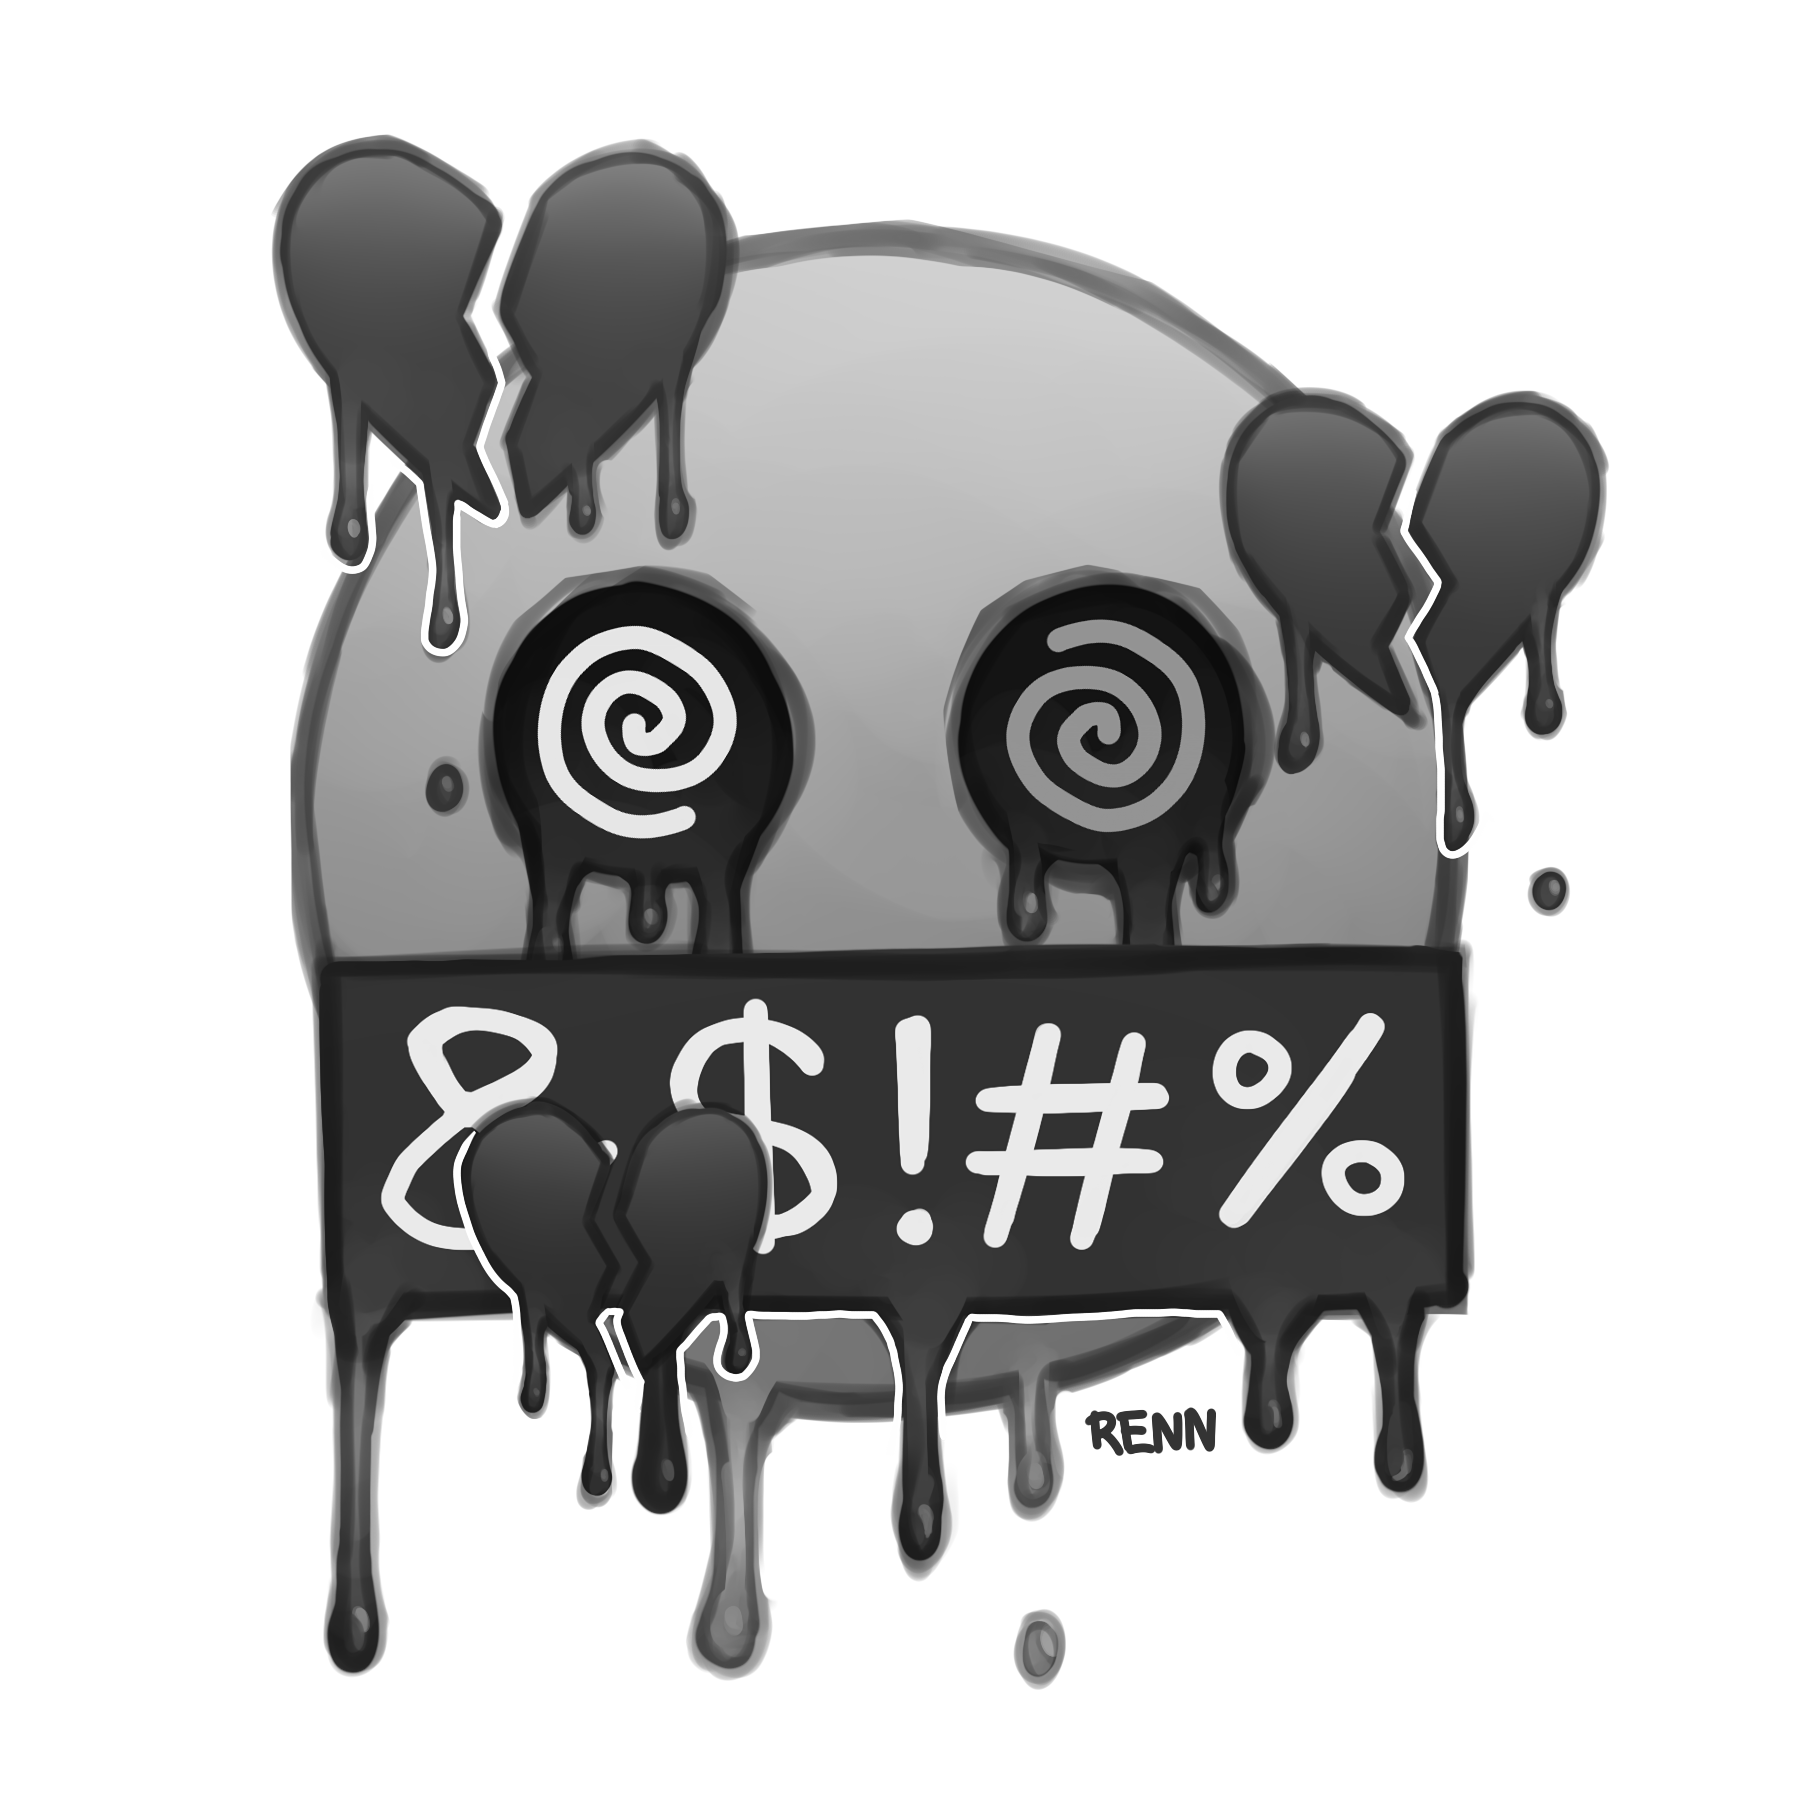 cursed emojiS by gabbiigator on DeviantArt